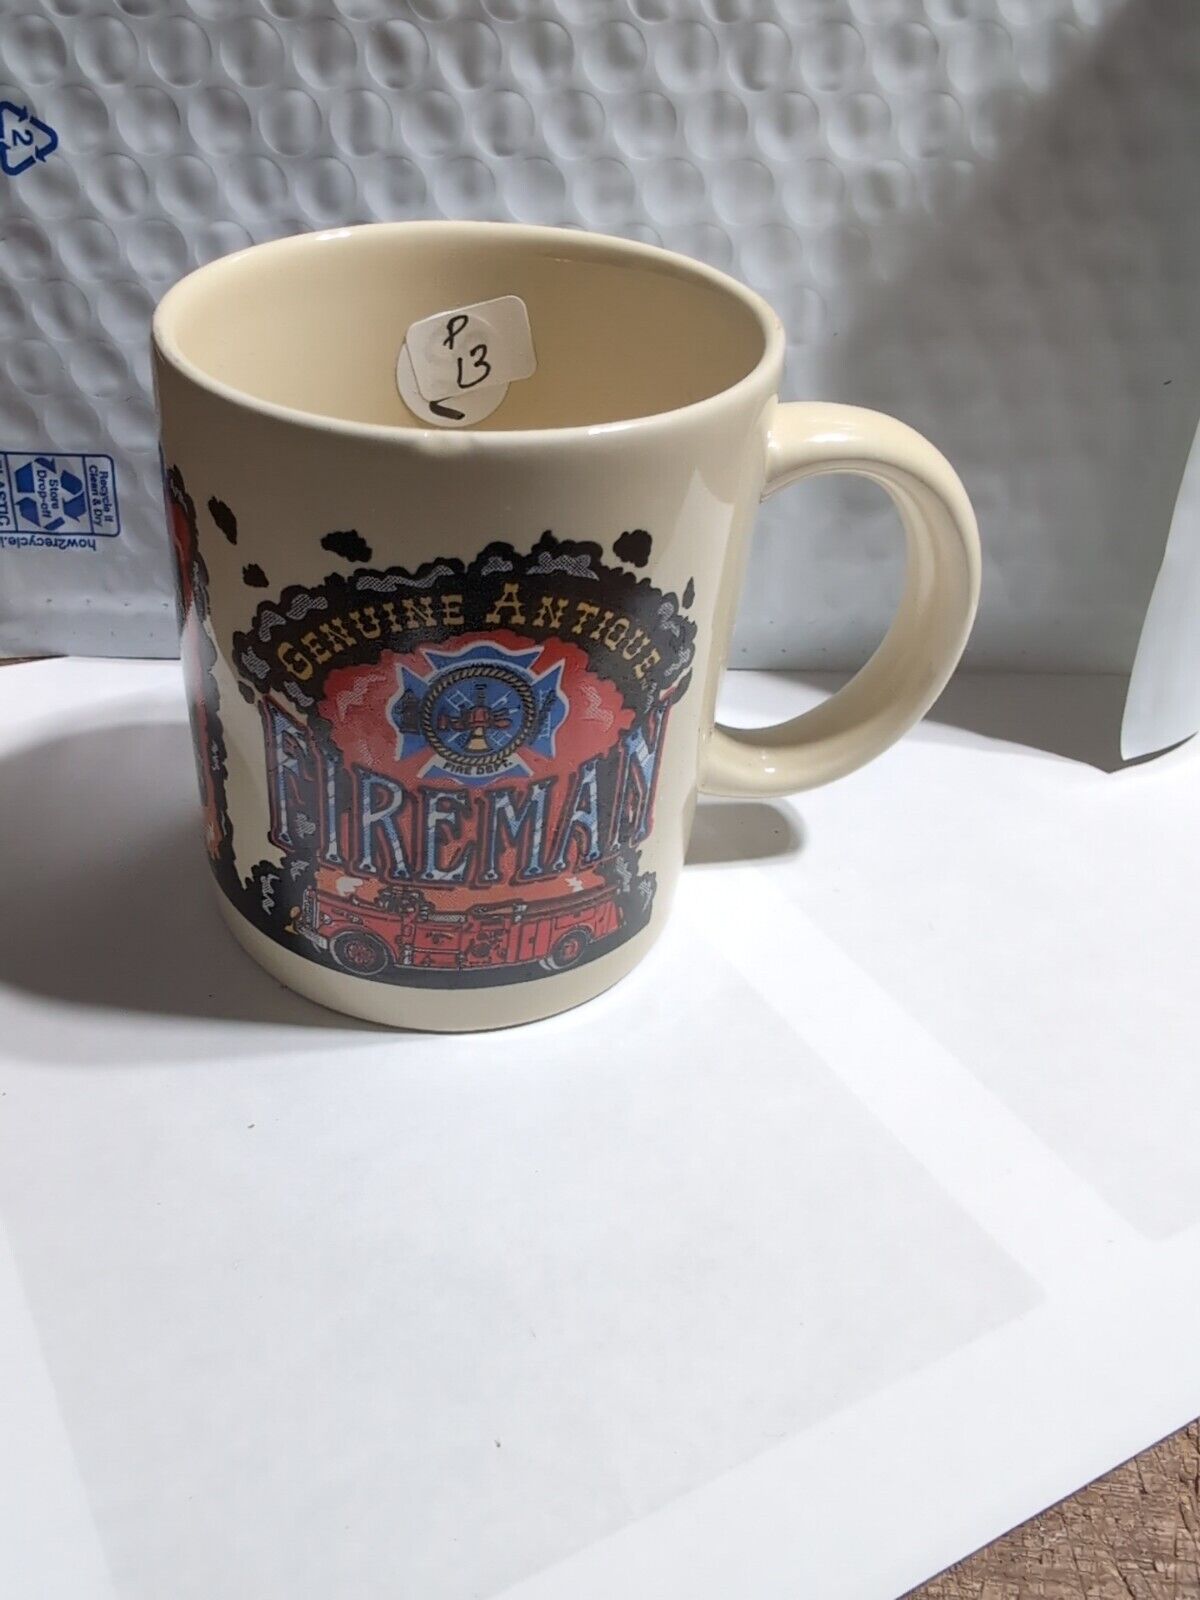 P13 Genuine Antique Fireman Cup Mug